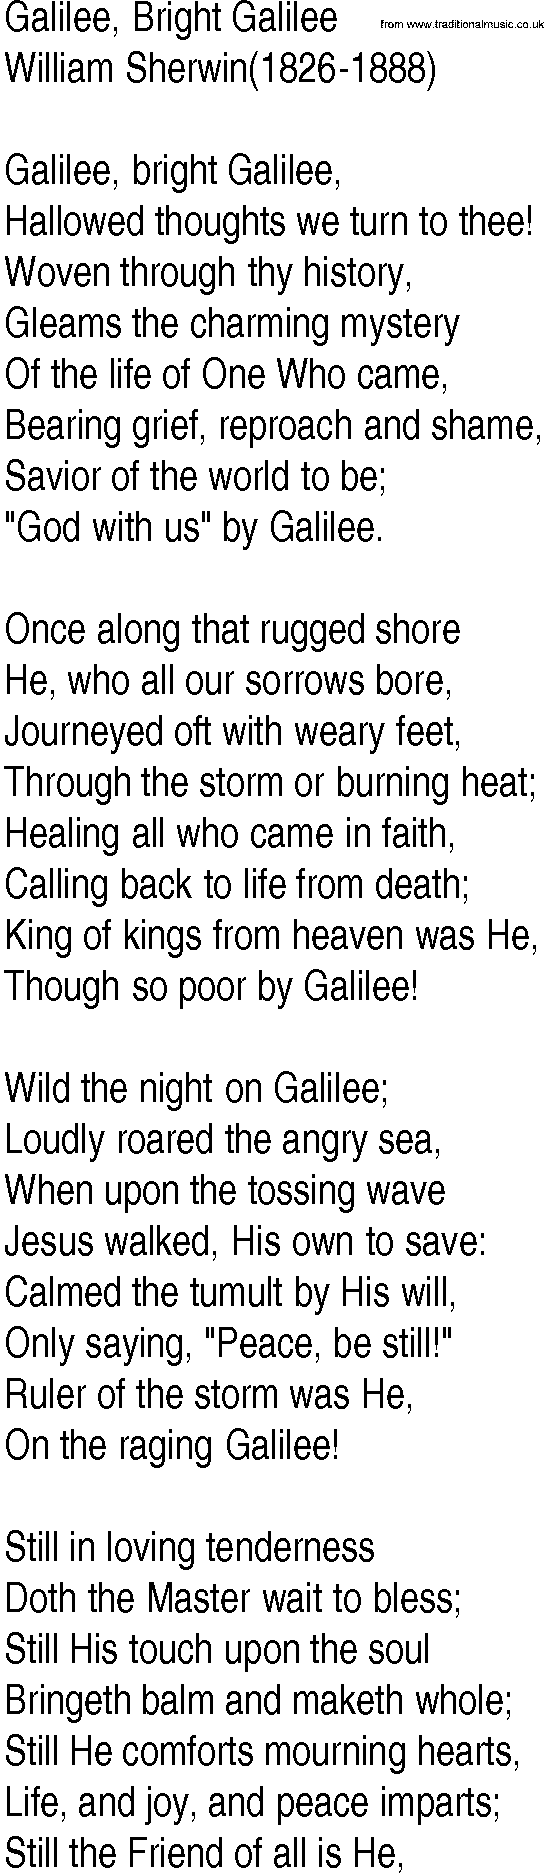 Hymn and Gospel Song: Galilee, Bright Galilee by William Sherwin lyrics